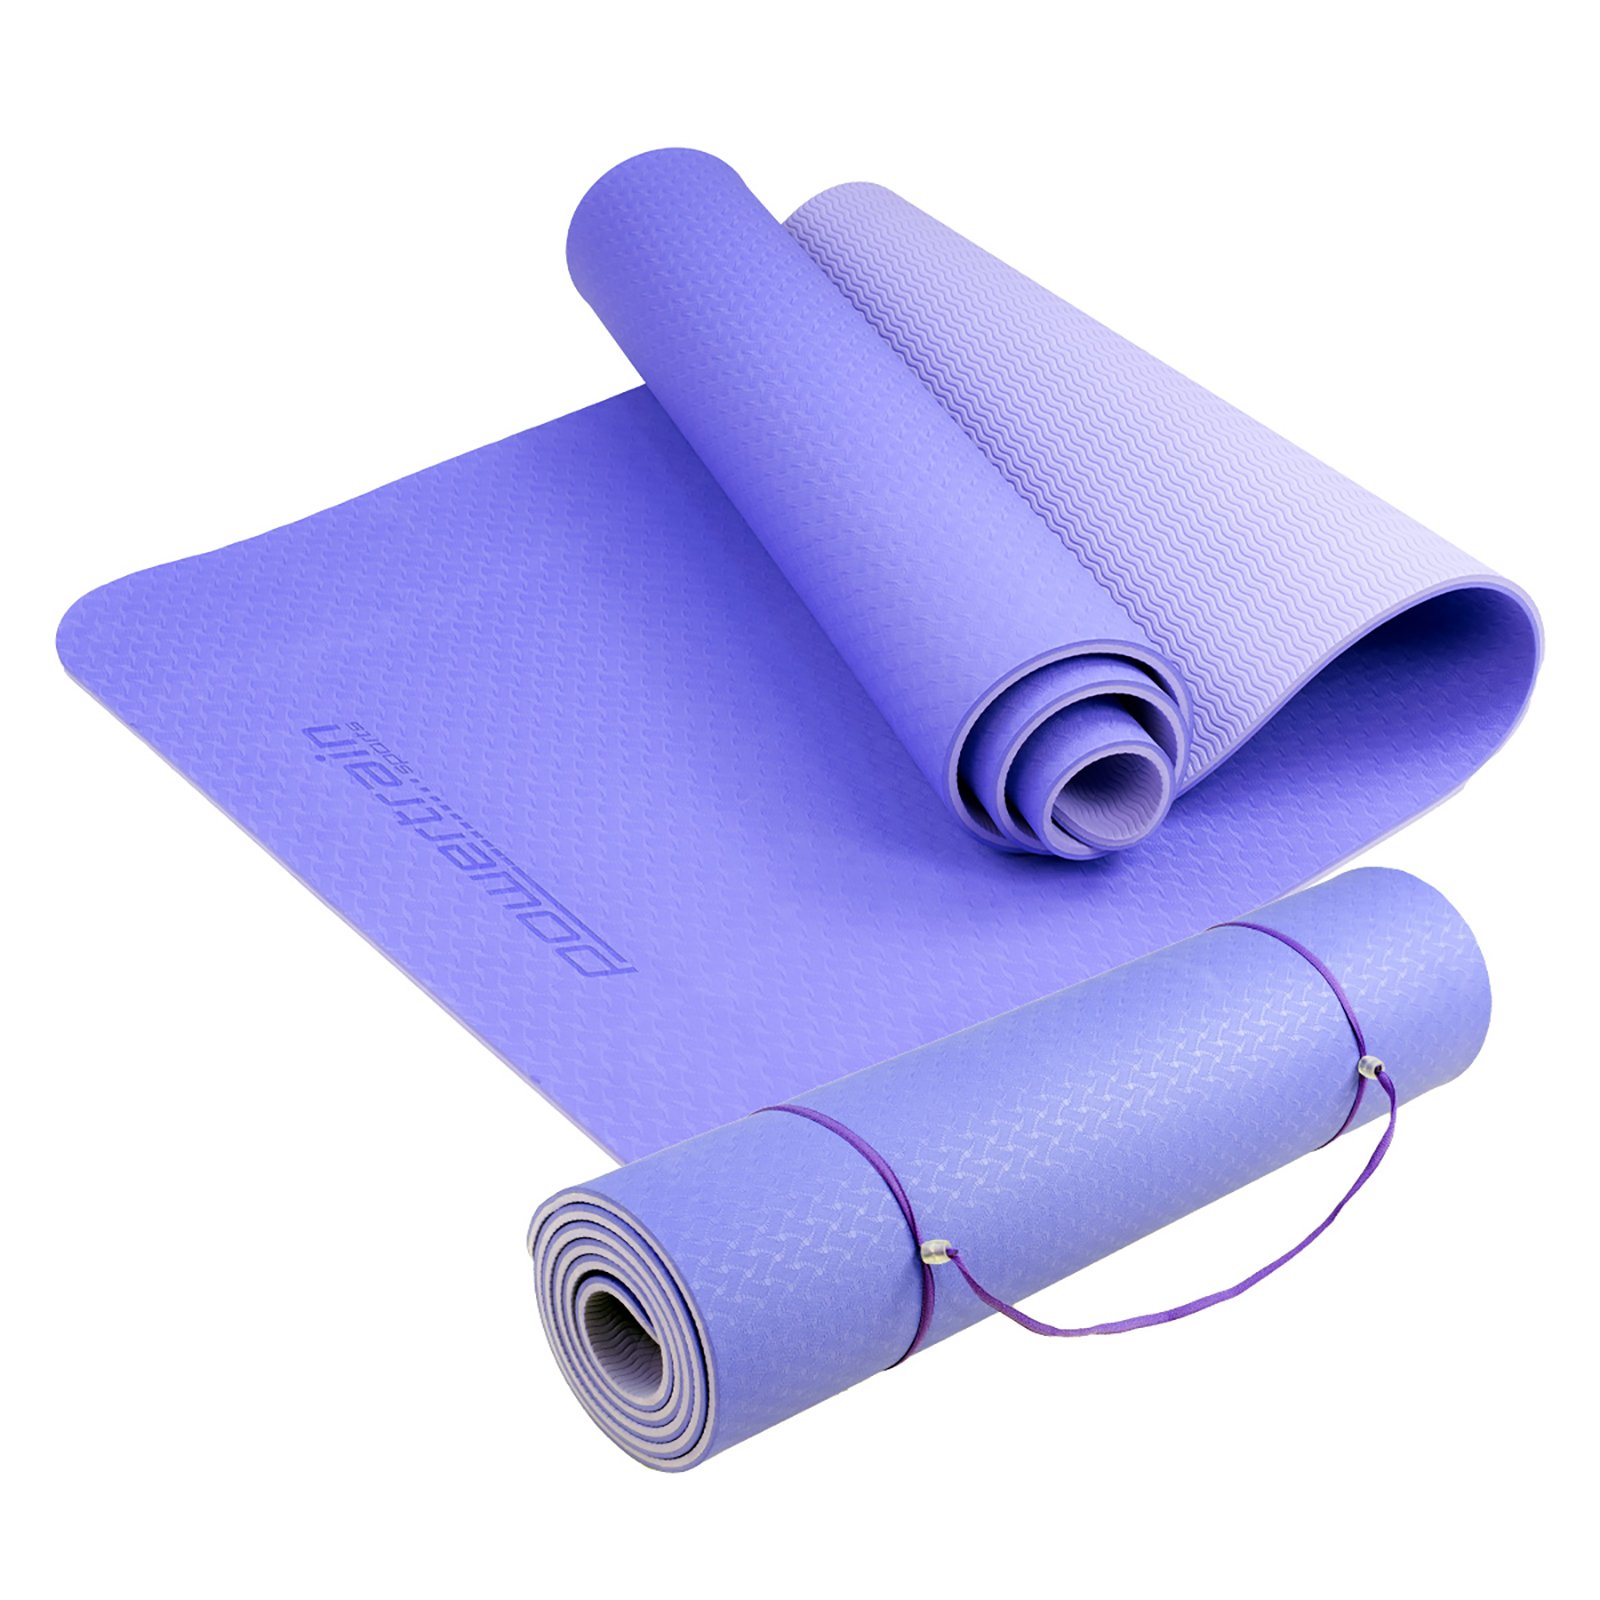 Powertrain Eco-Friendly TPE Pilates Exercise Yoga Mat 8mm - Light Purple 2